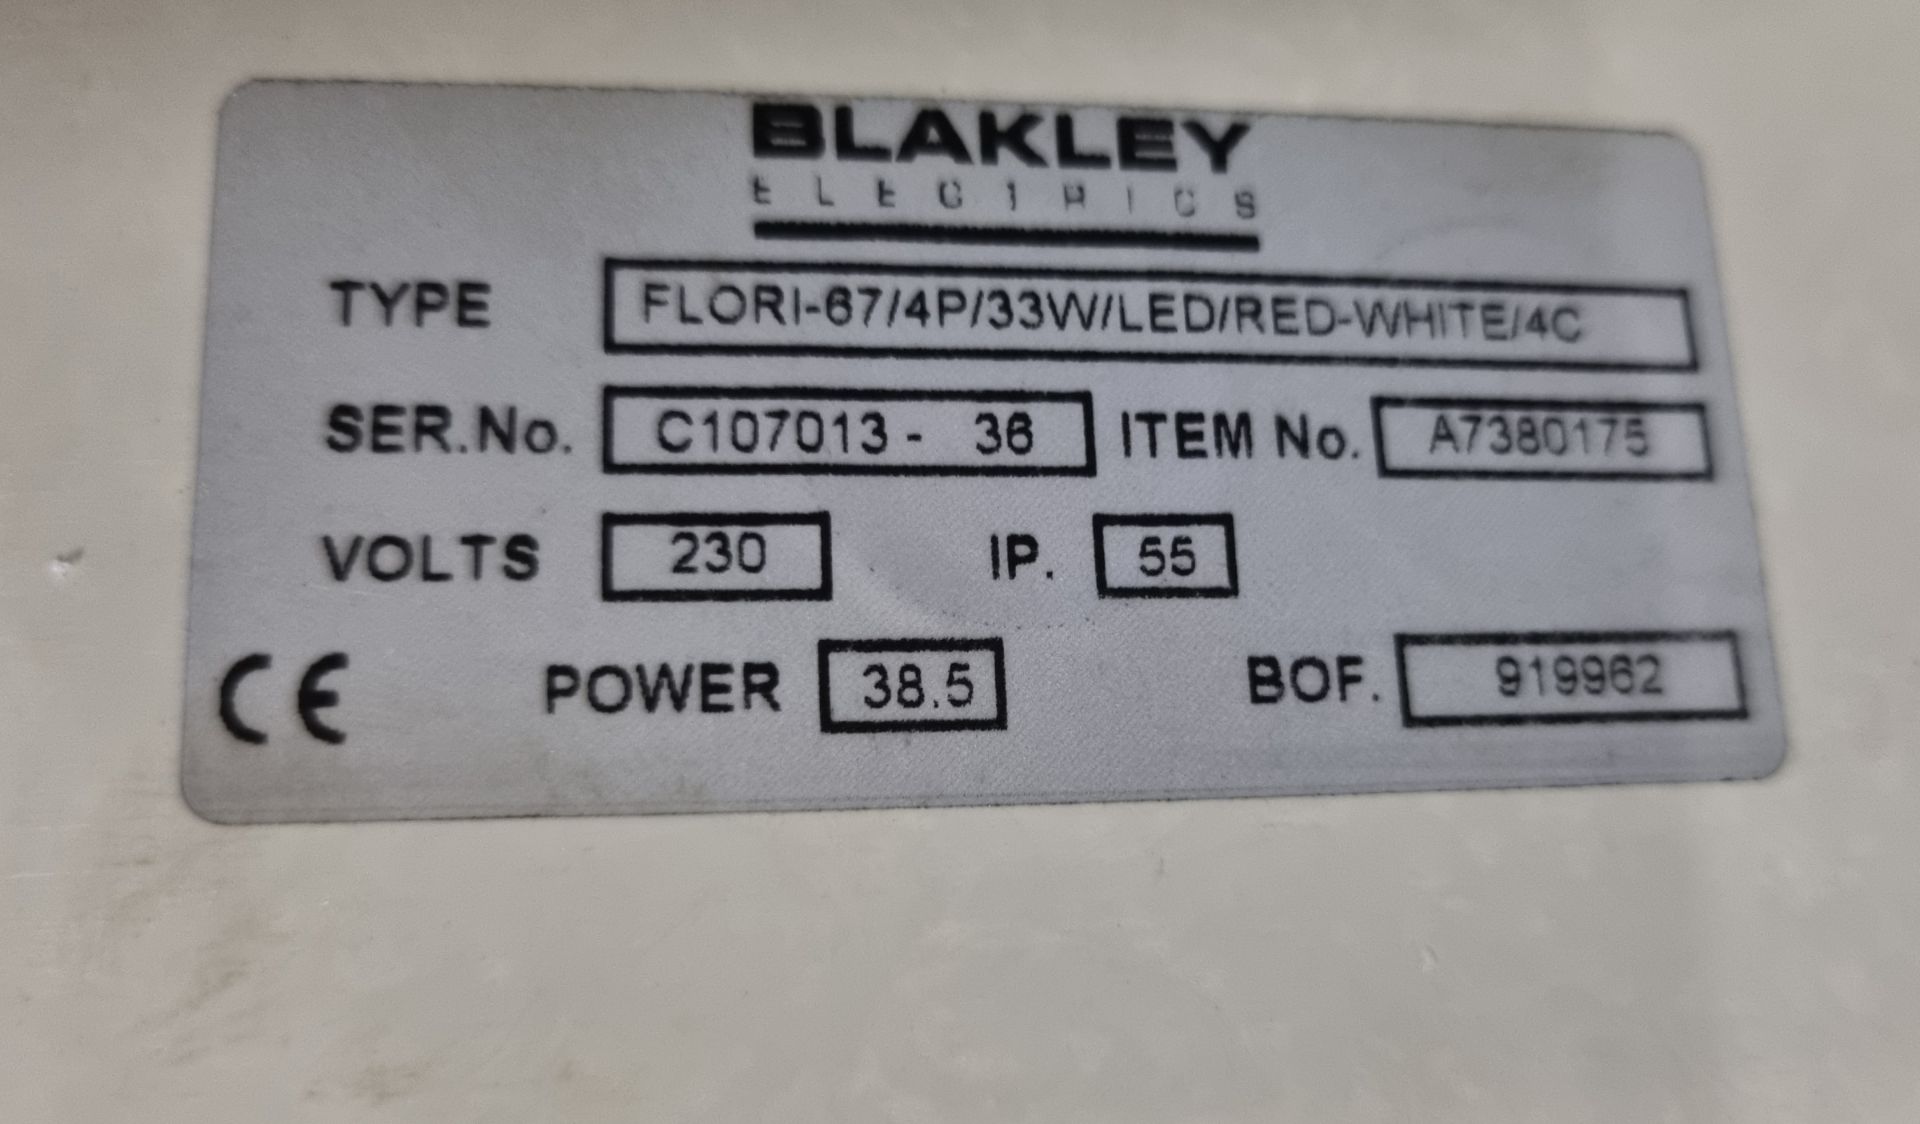 8x Blakley Light assemblies - green cable FLORI-67/4P/67W/LED/EMER/4C - Image 3 of 3